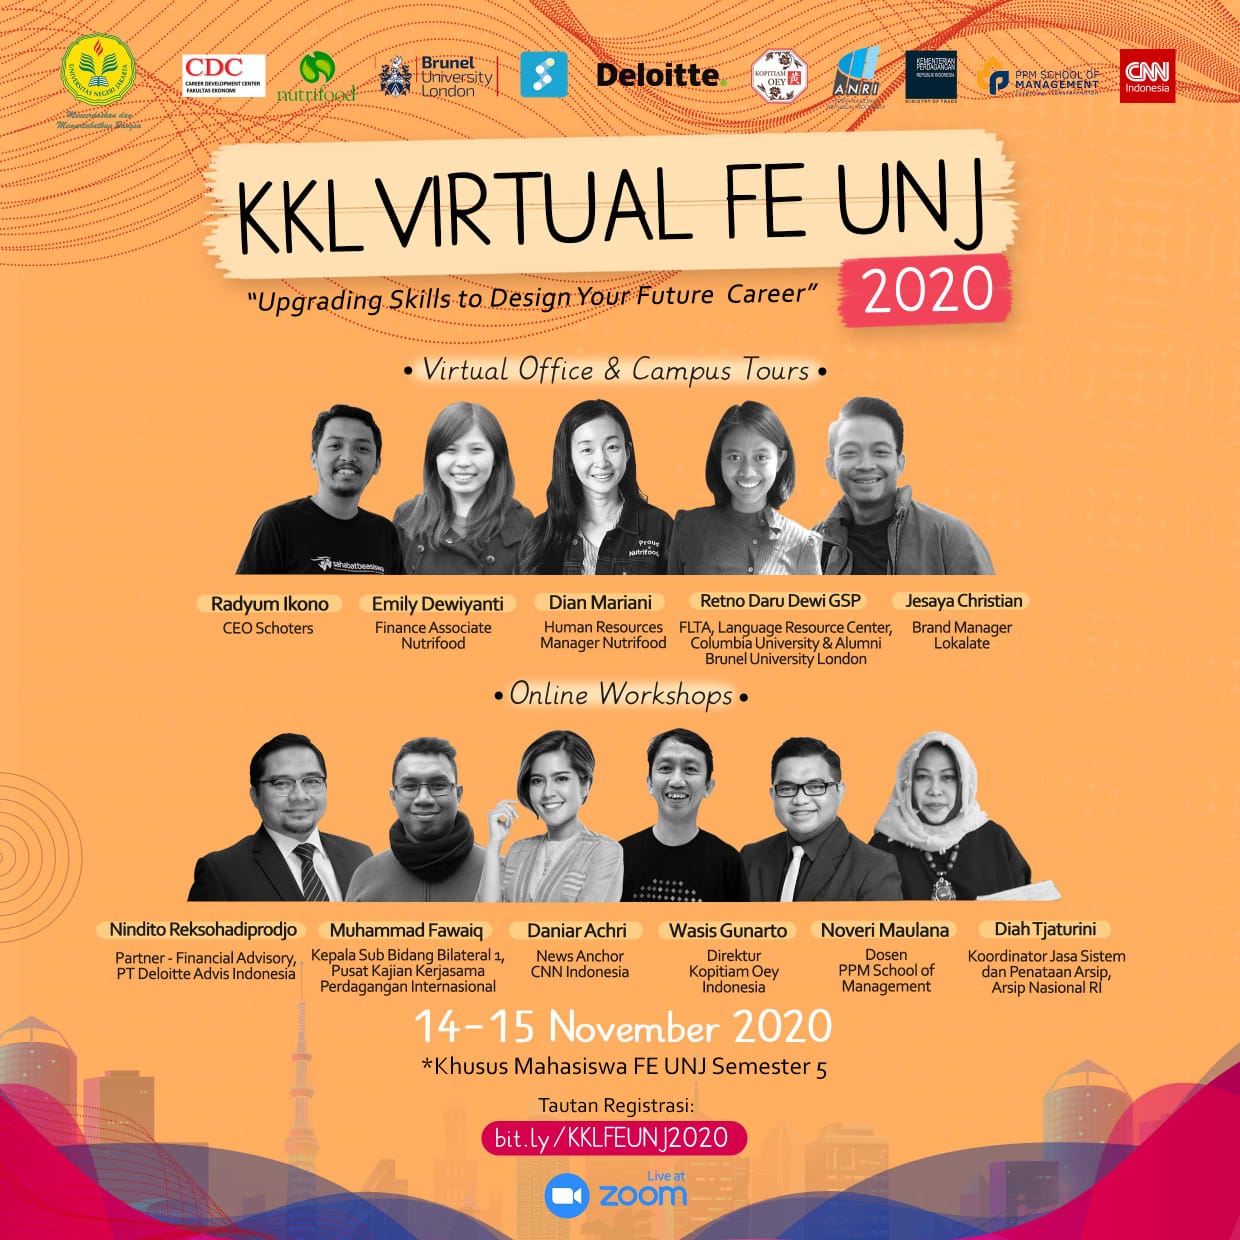 Kuliah Kerja Lapangan Virtual FE UNJ 2020 Keseruan Mengunjungi Perusahaan dan Kampus Secara Daring